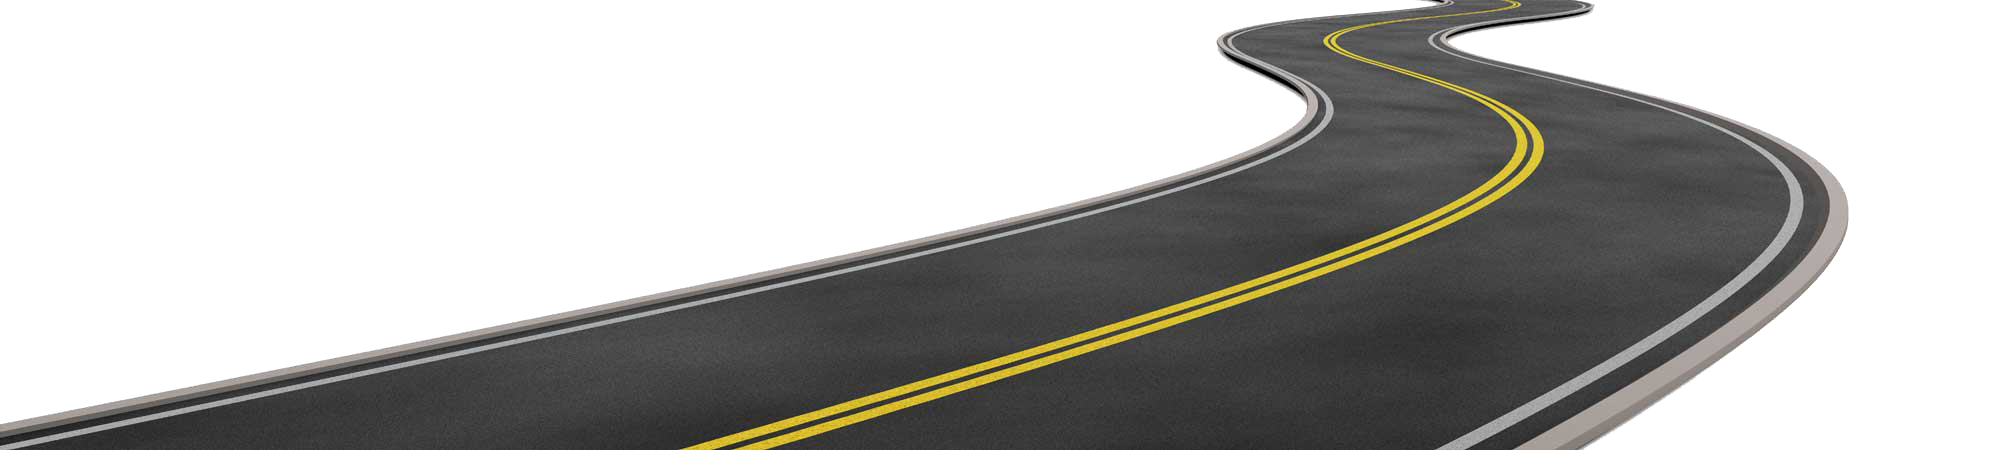 Road Download Transparent PNG Image